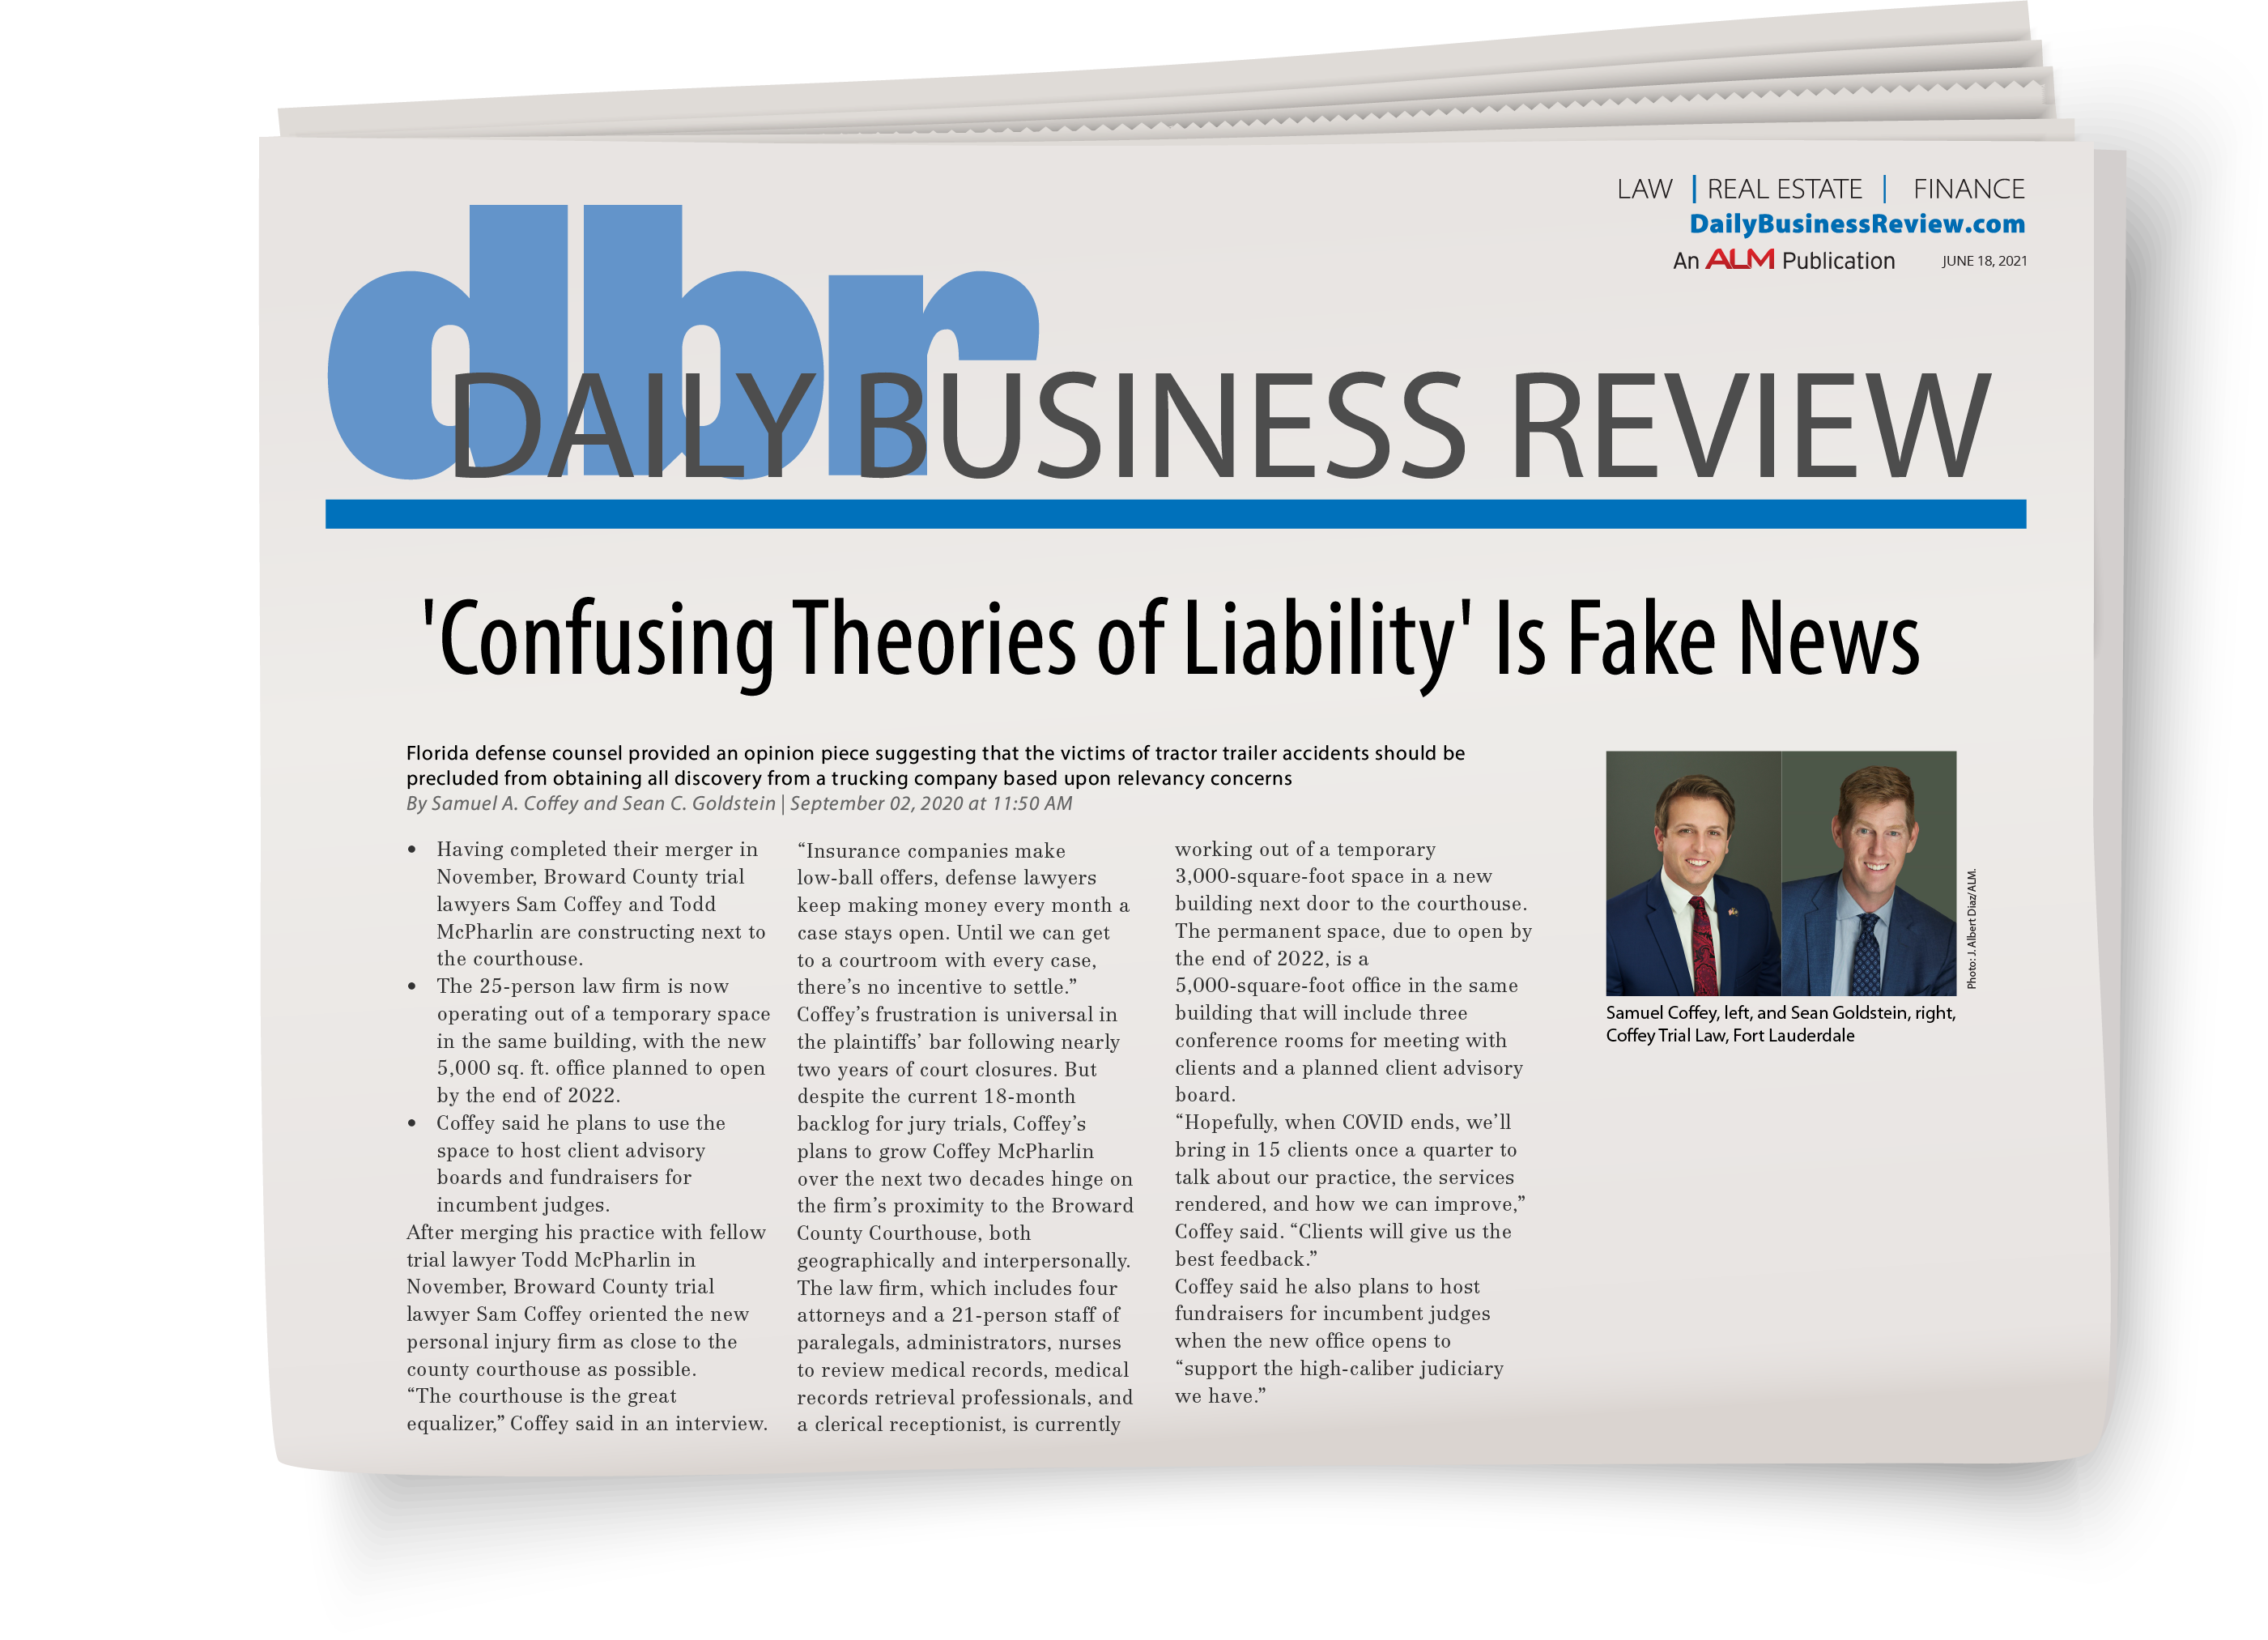 DBR Article on Liability